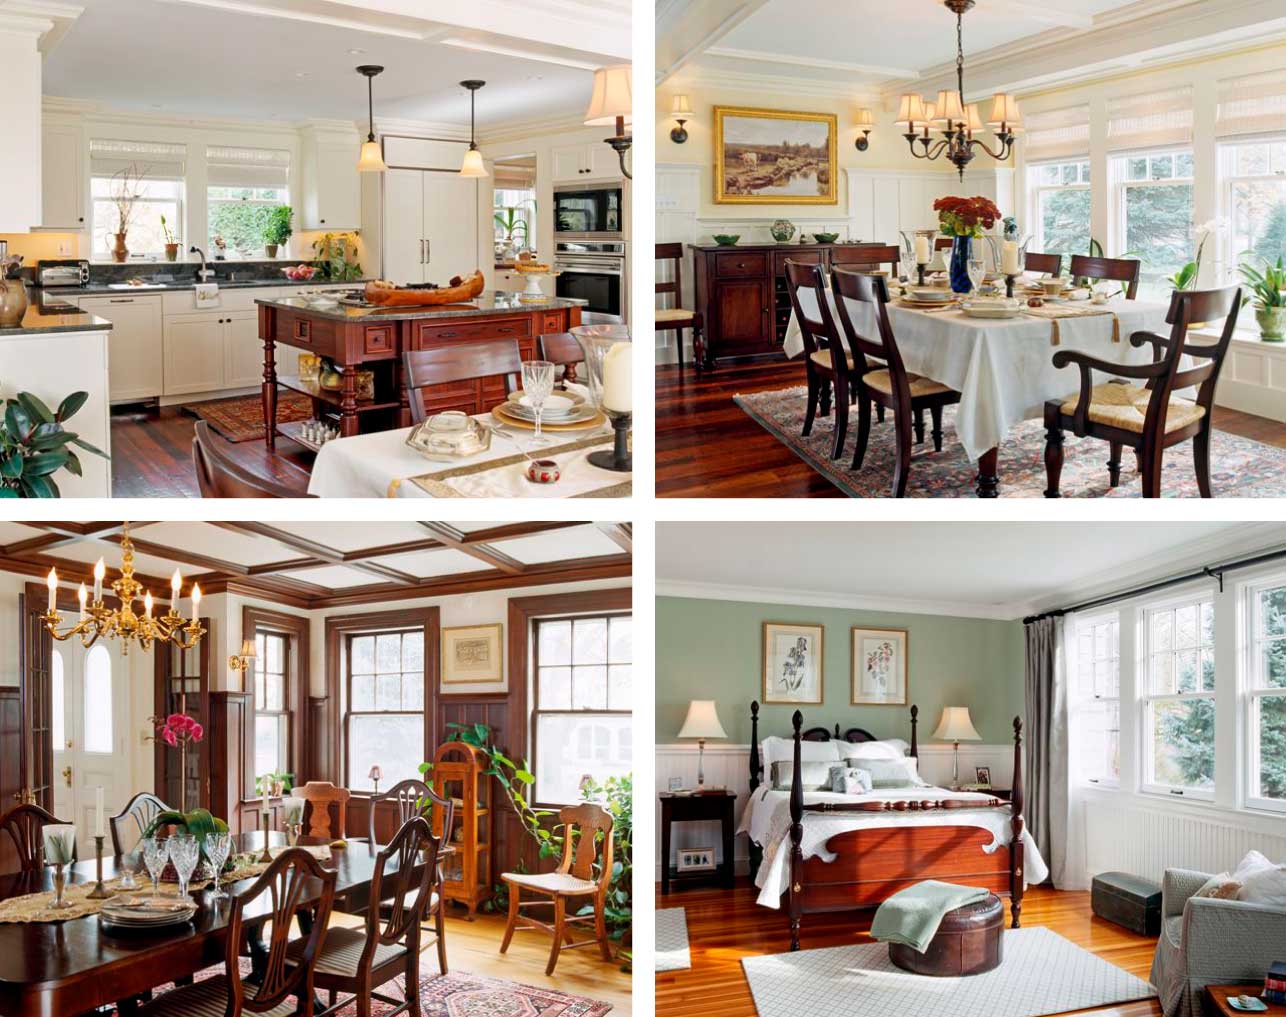 north-shore-house-interior-joe-dick-renovation-dining-room-bedroom-kitchen